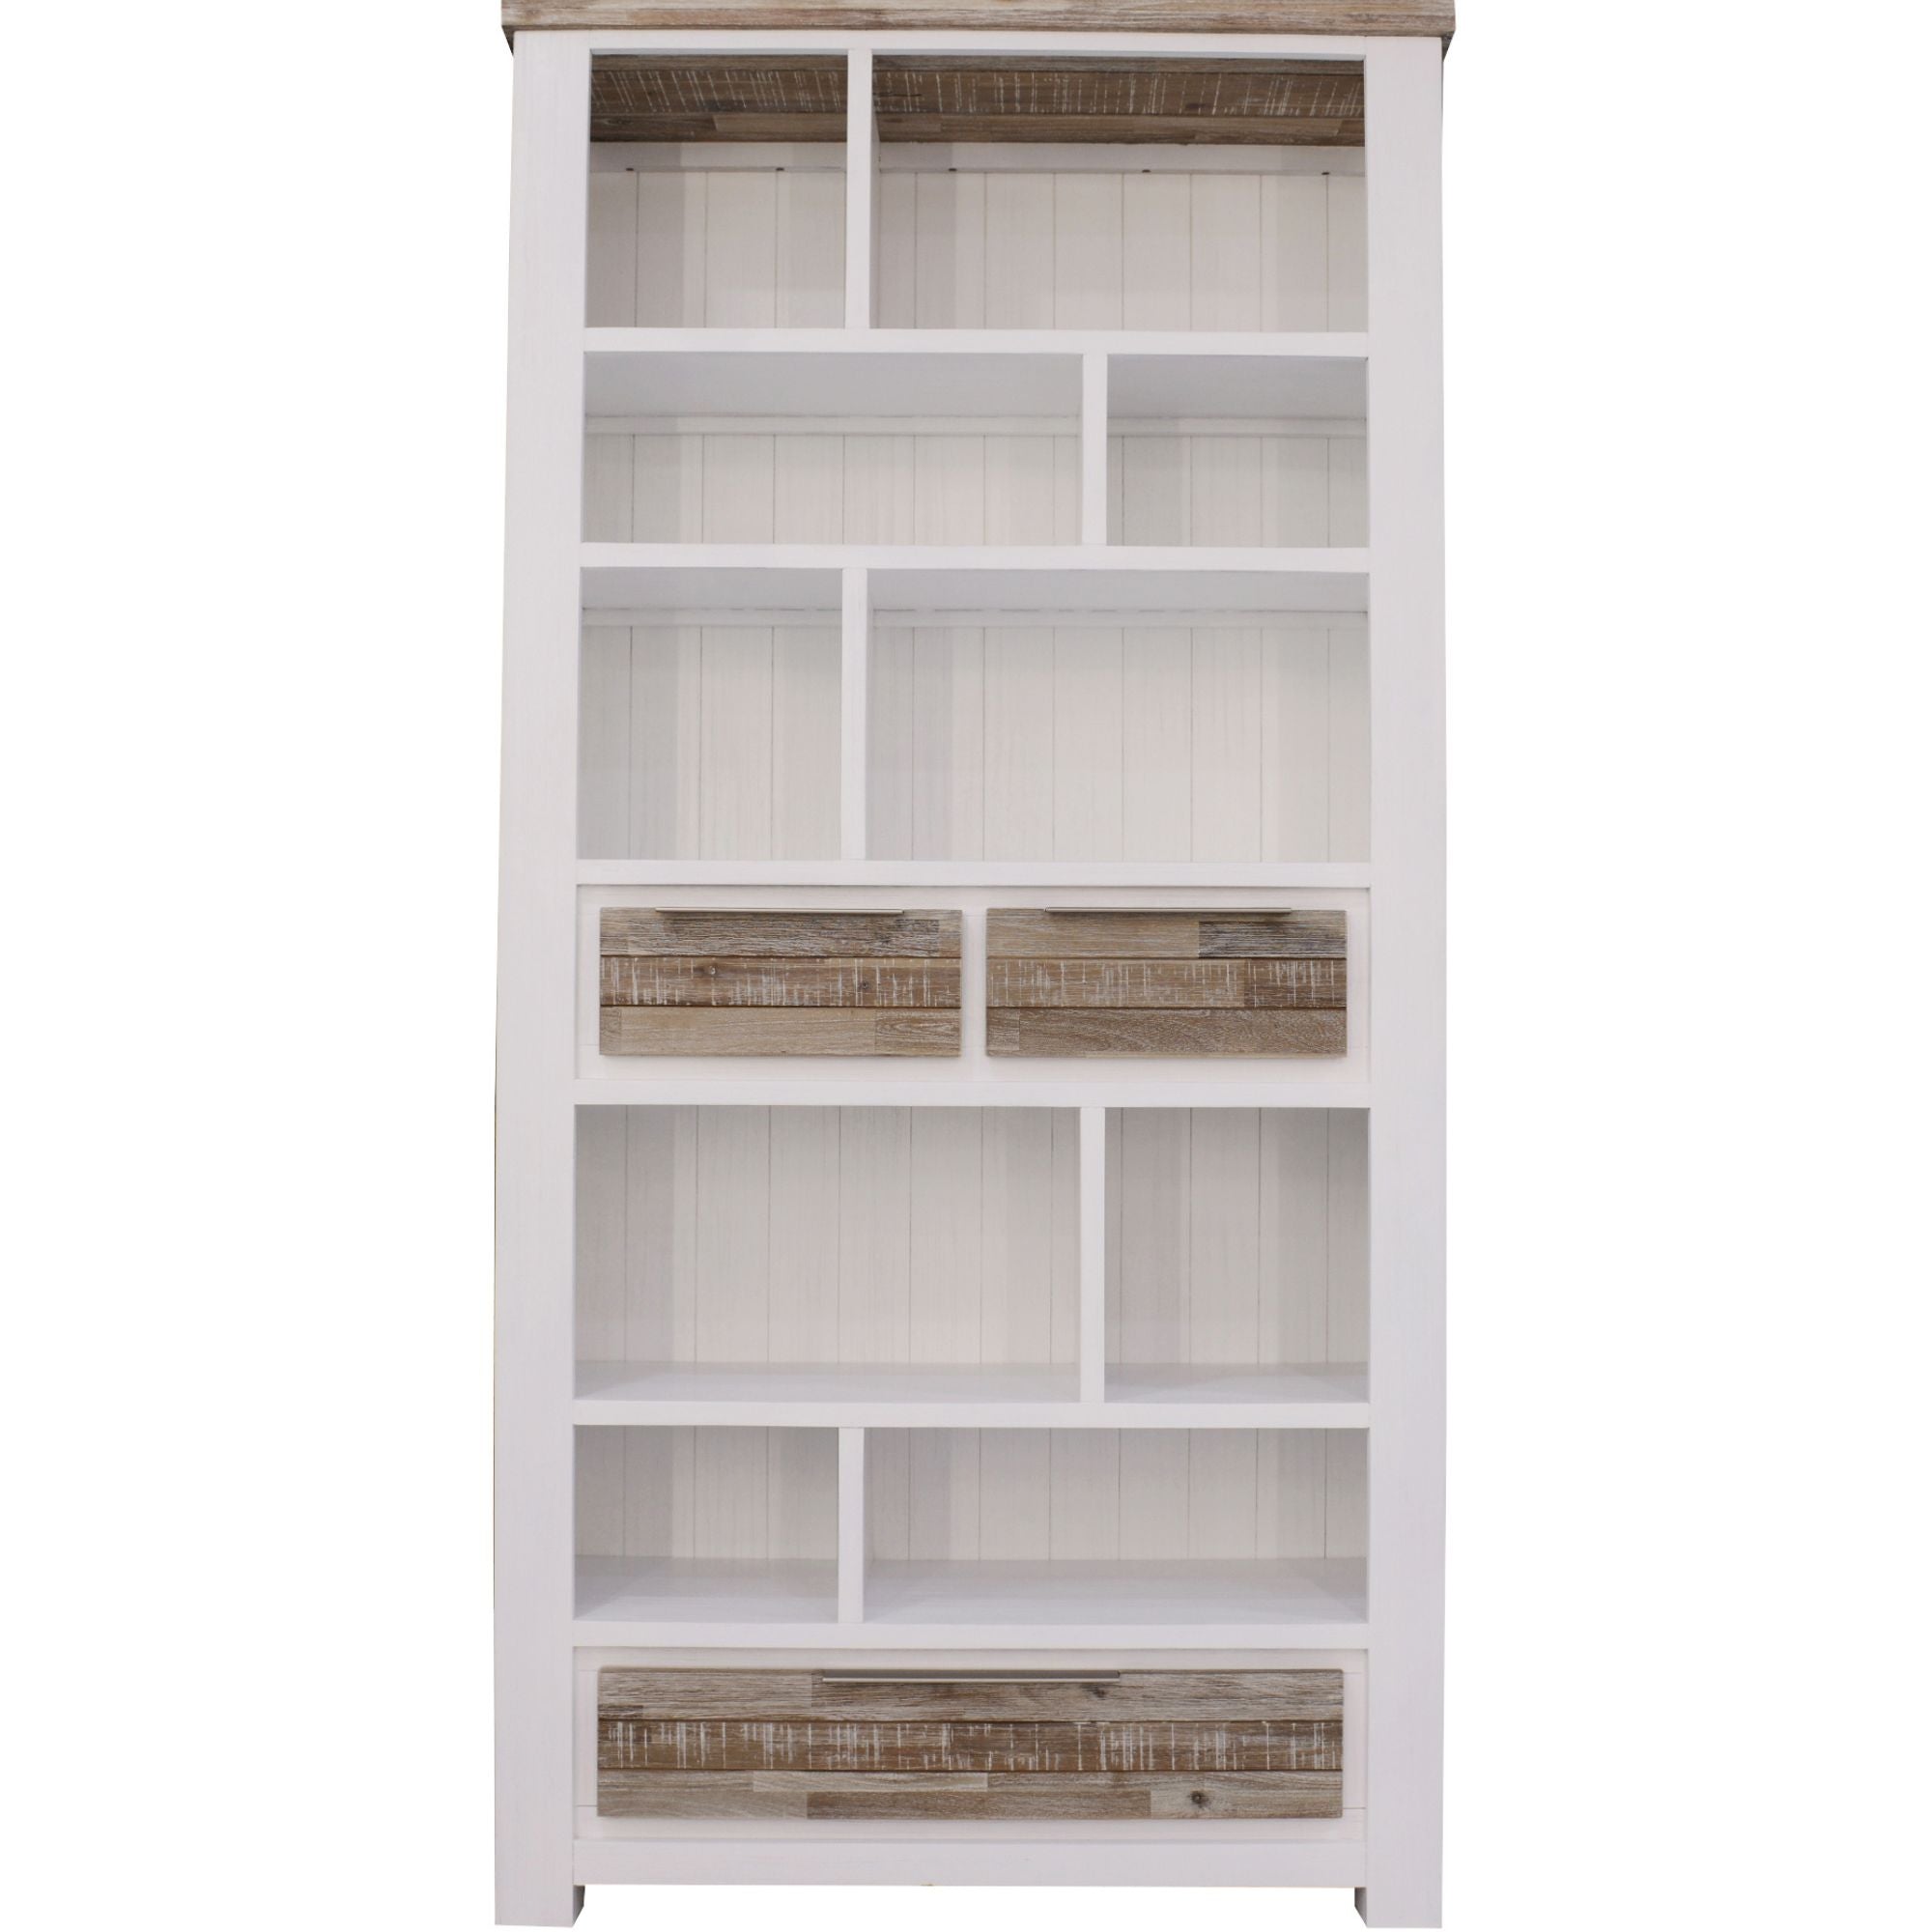 Plumeria Bookshelf 200cm Bookcase Display Unit Solid Acacia Timber Wood